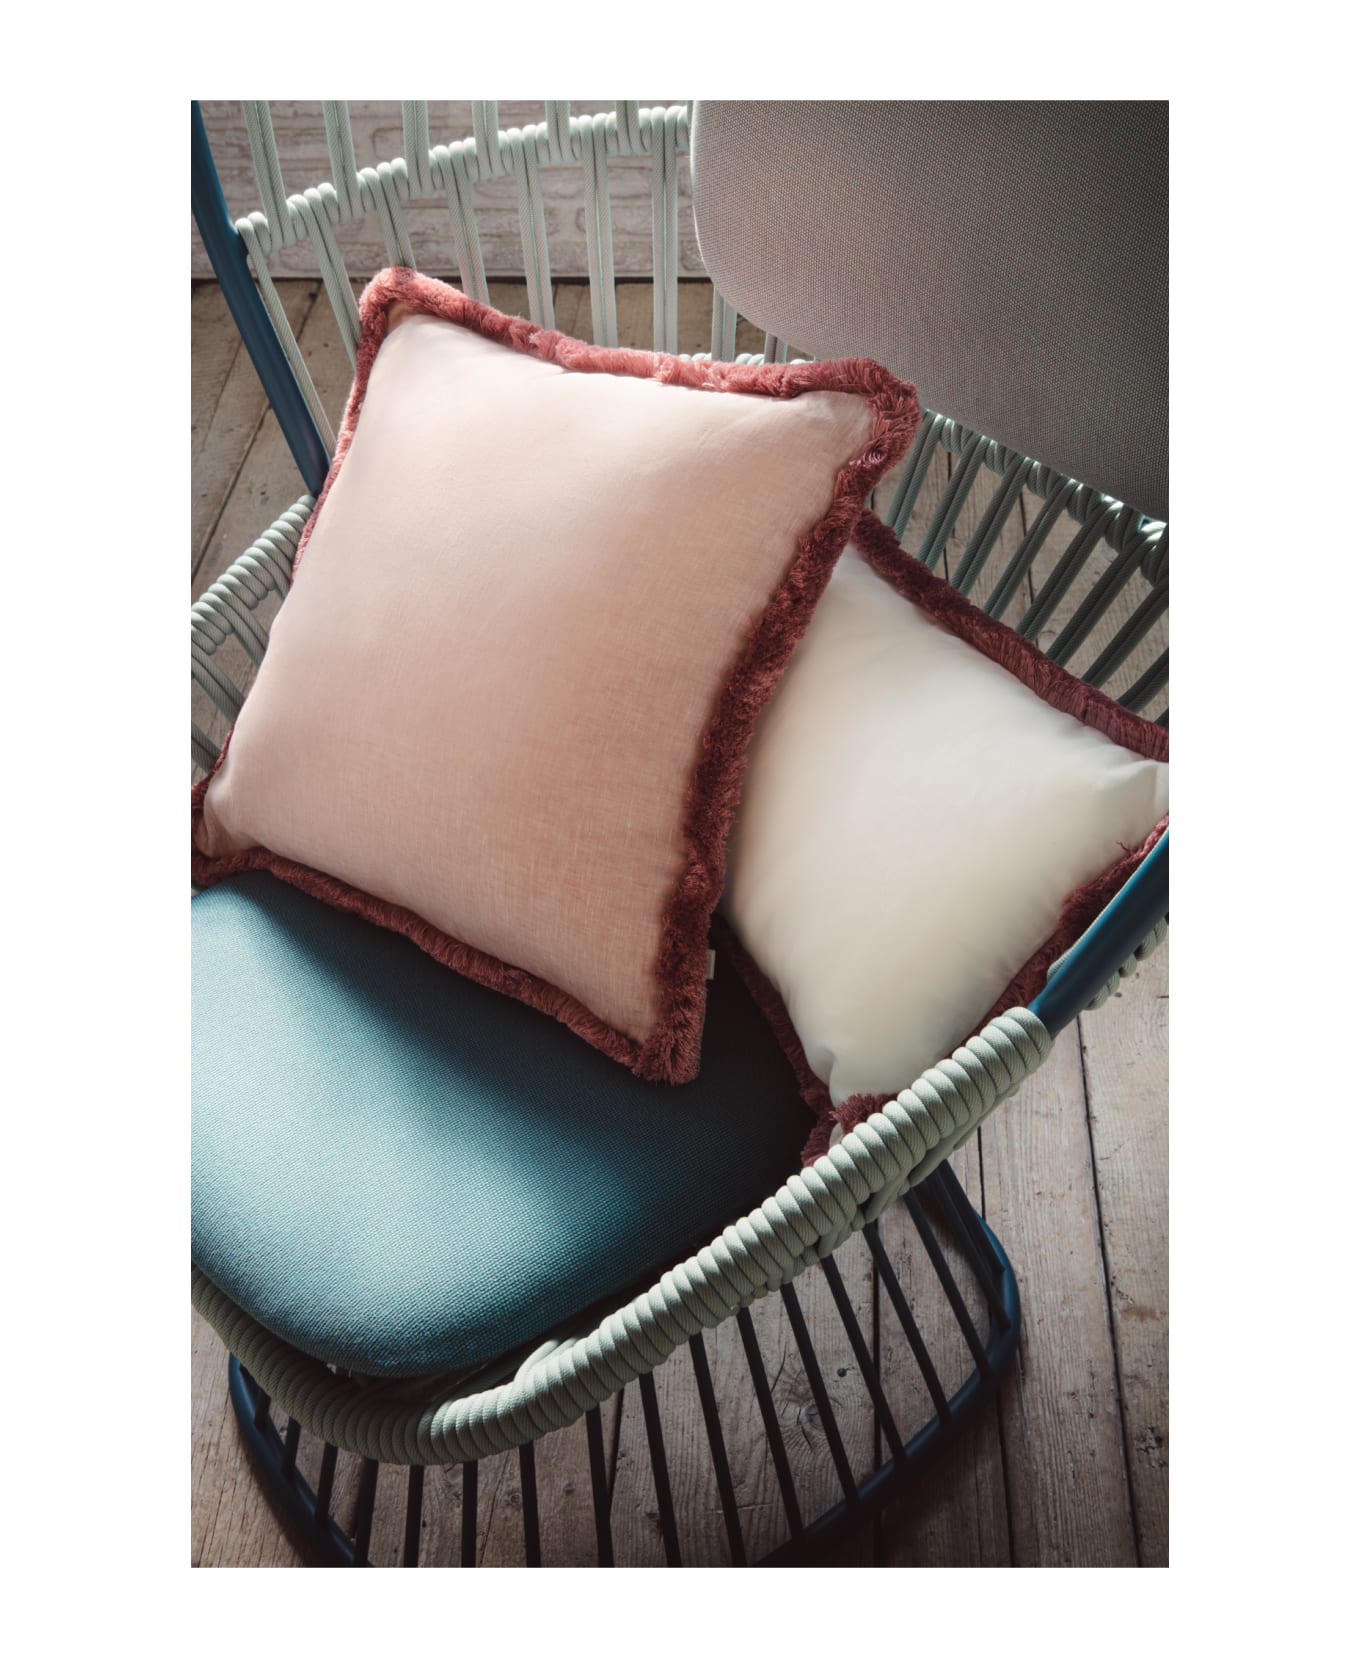 Lo Decor Happy Linen Pillow - Add to bag